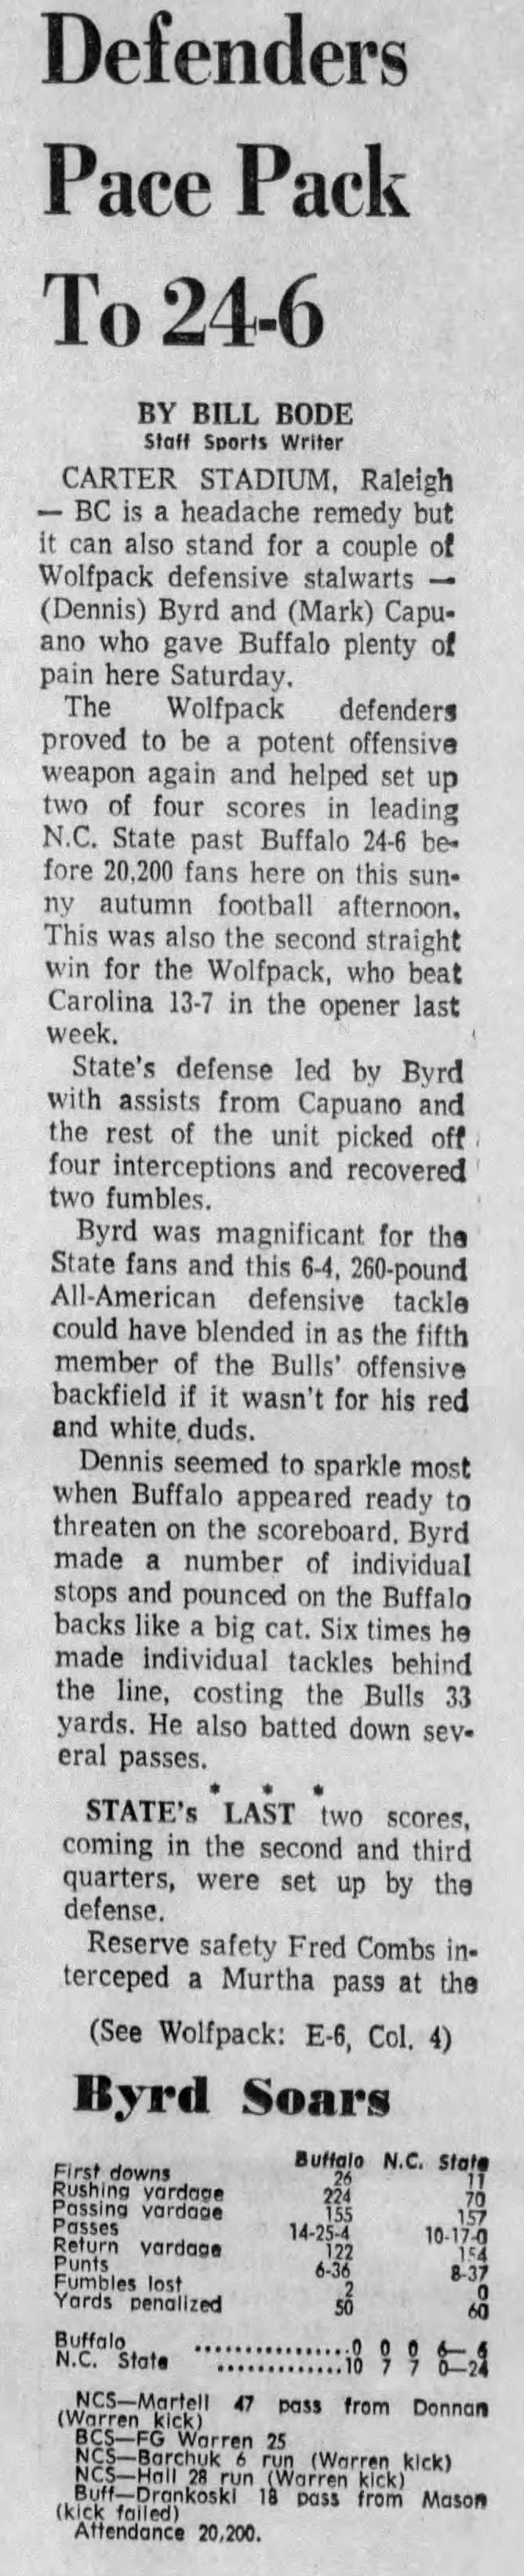 State whips Buffalo